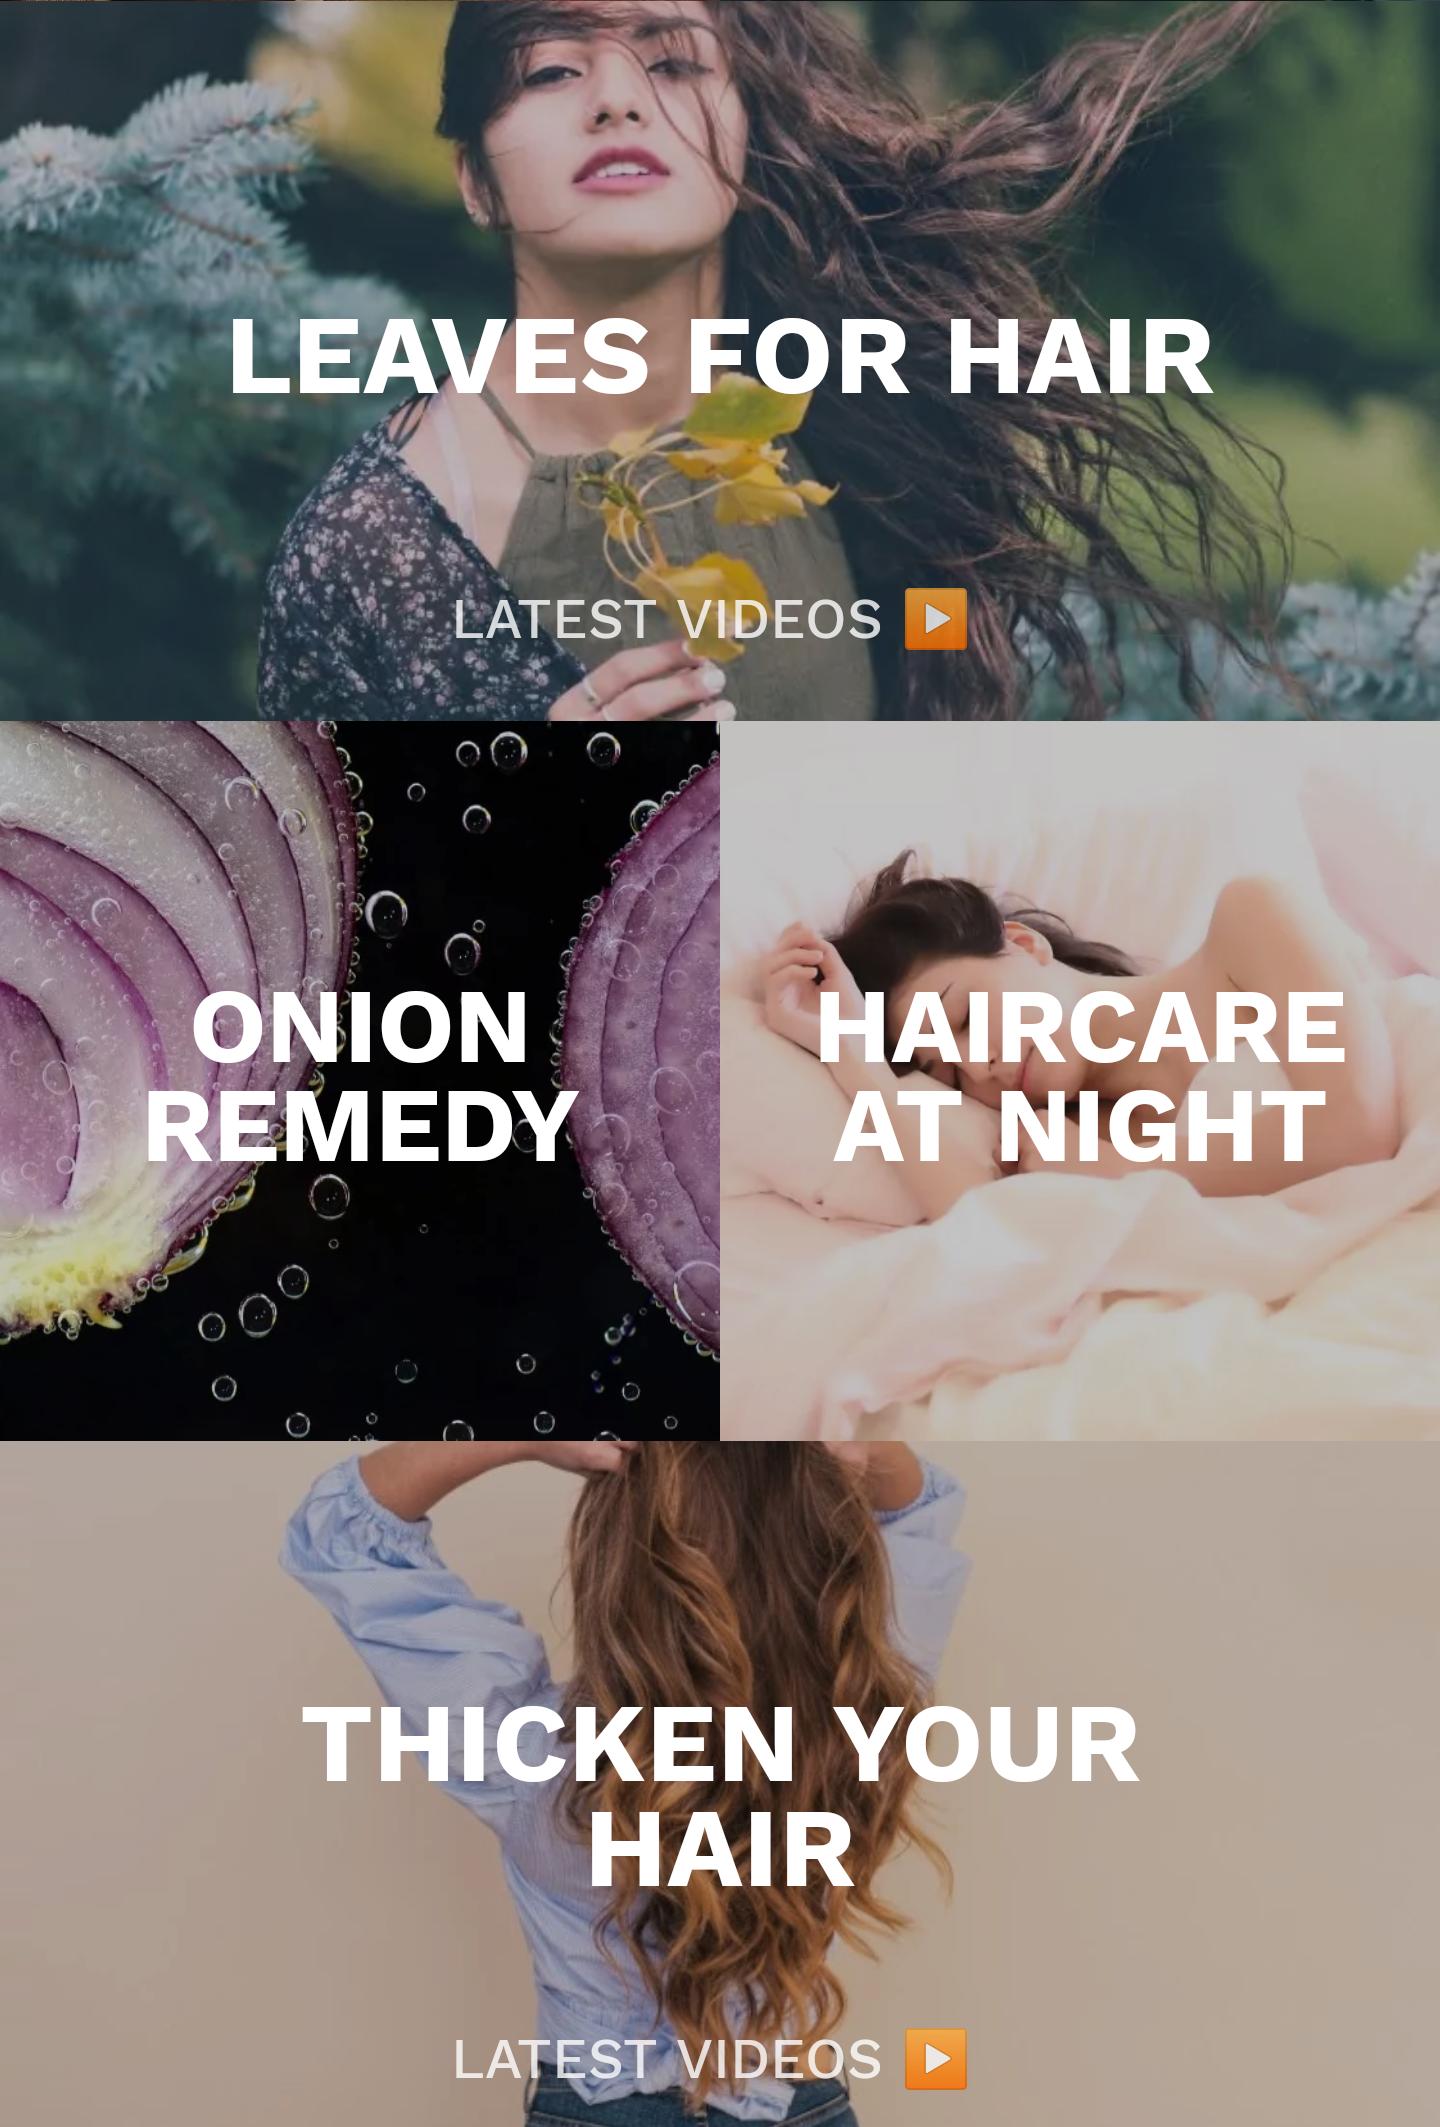 Haircare app for women 3.0.168 Screenshot 6